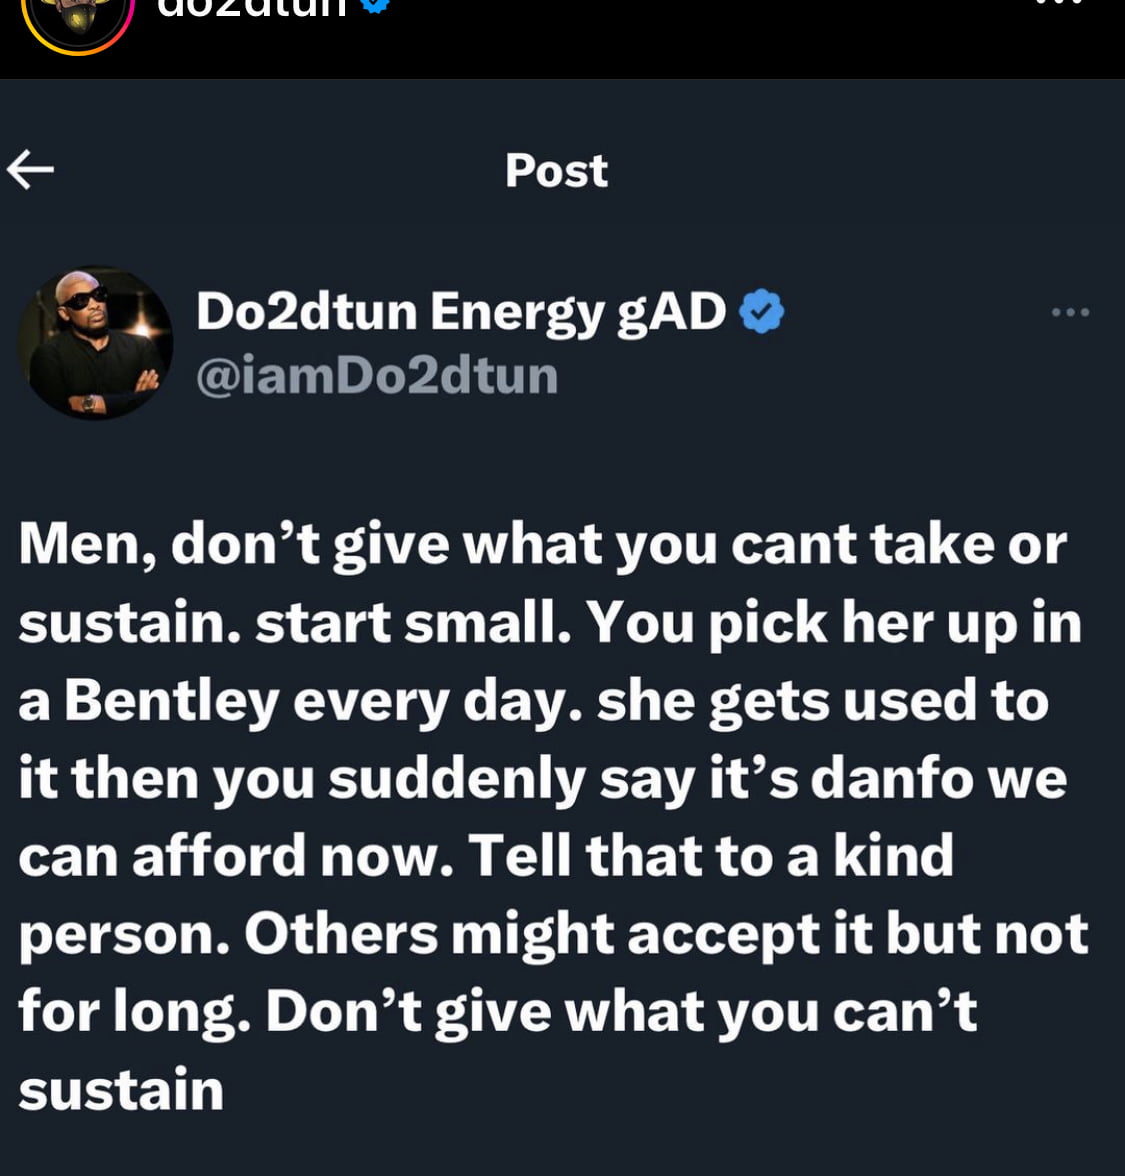 Do2dtun shares tips on self-care for men.